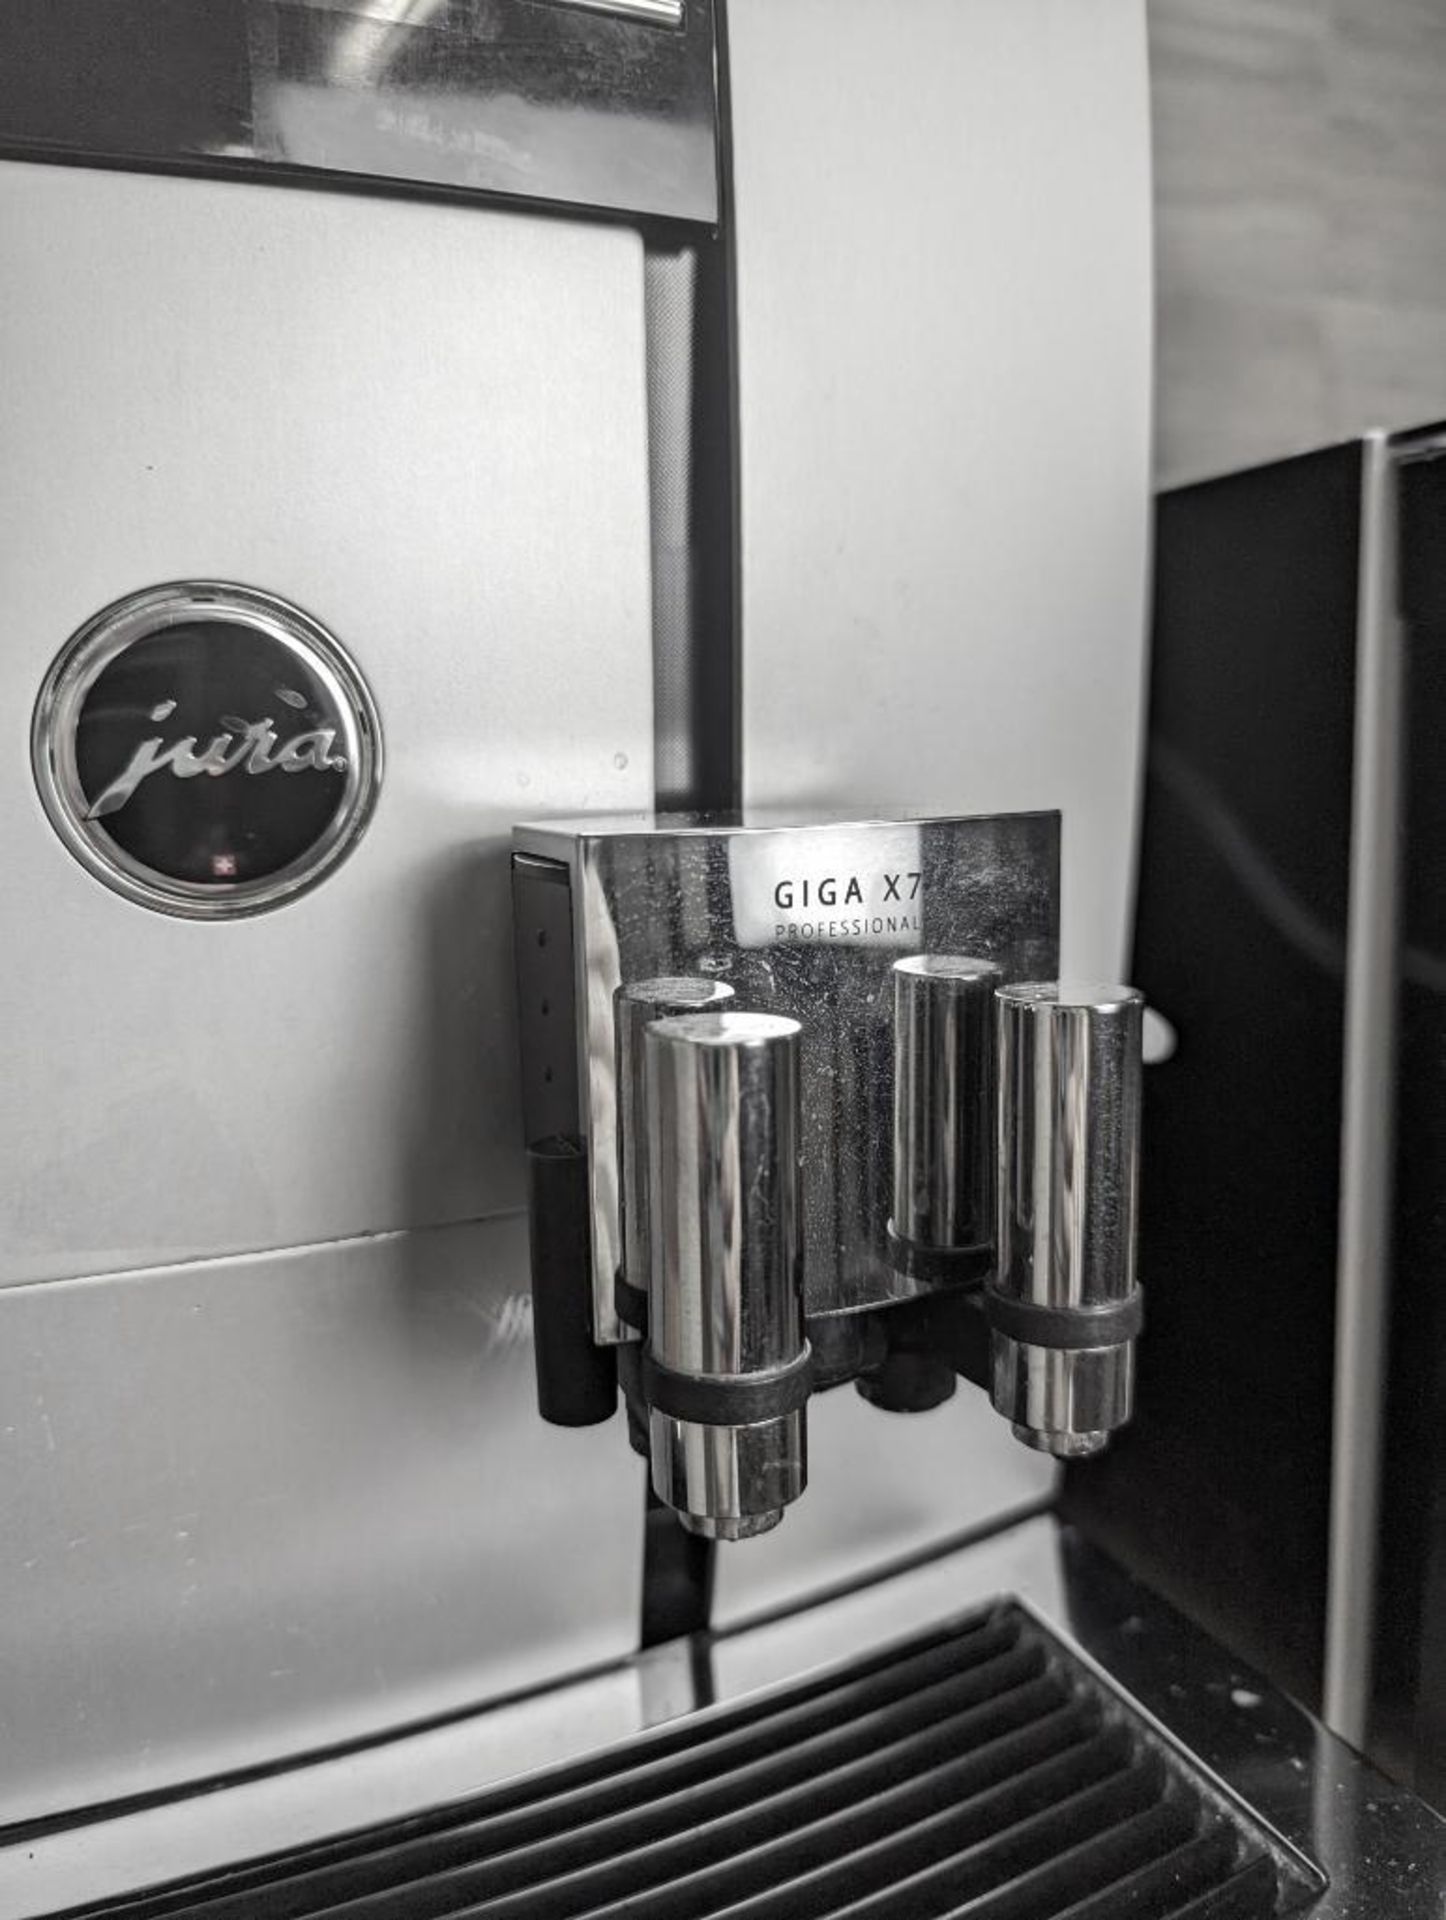 JURA GIGA X7 PROFESSIONAL AUTOMATIC COFFEE MACHINE WITH MILK COOLER - Image 11 of 16